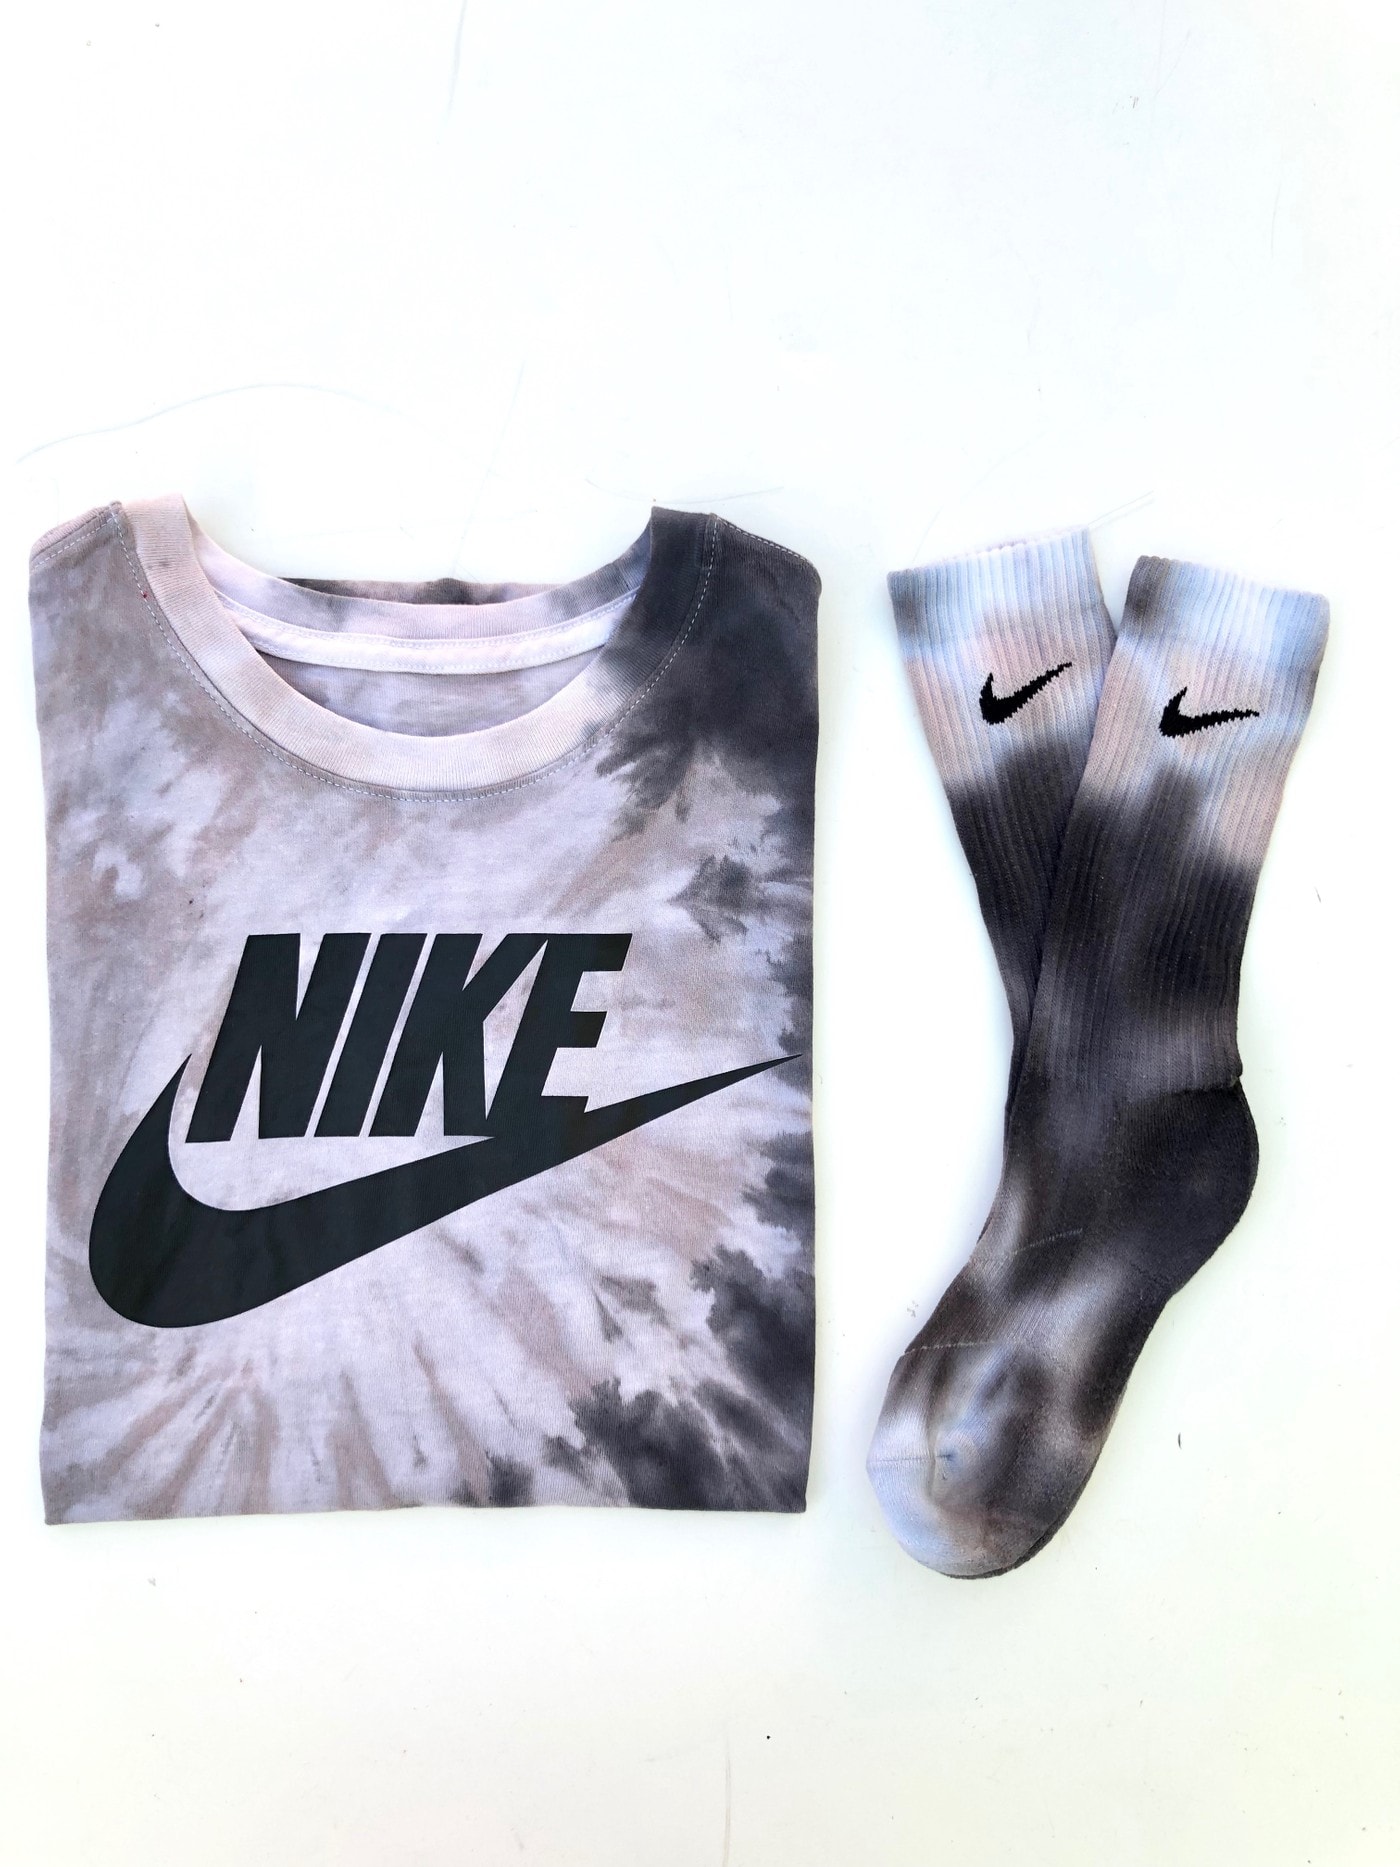 Maison Mère 推出自家染製 Nike 系列單品